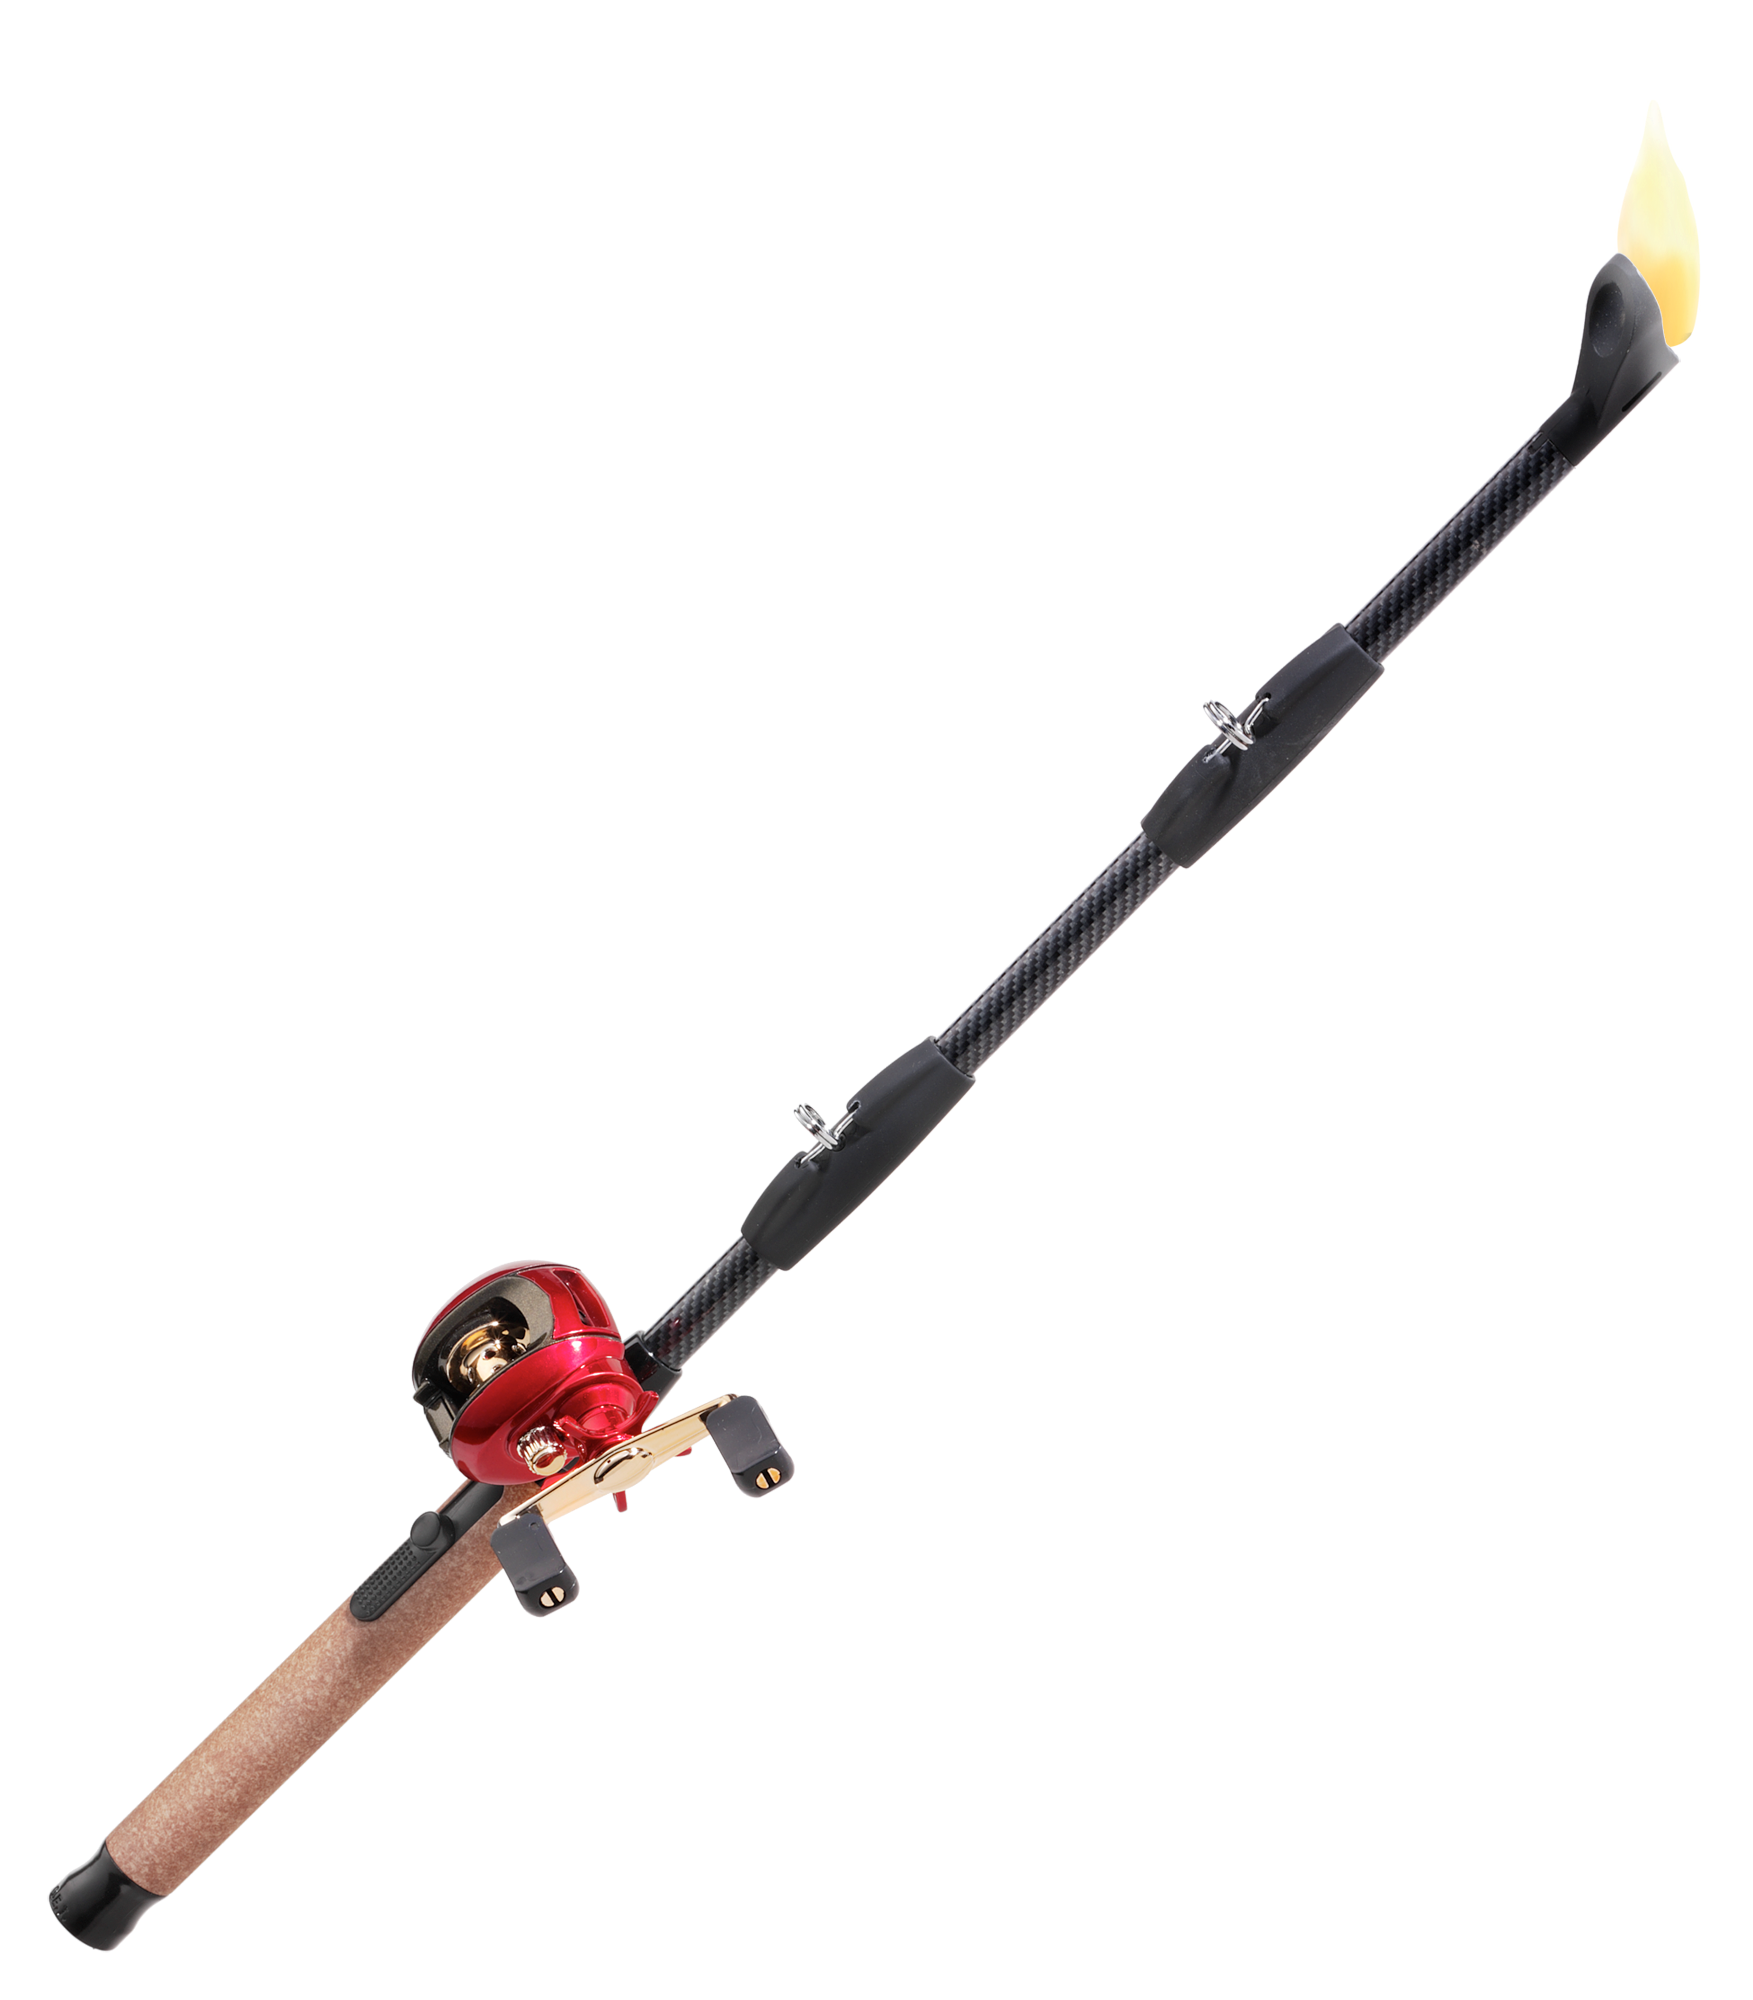 8 Baitcast Fishing Pole Lighter ideas